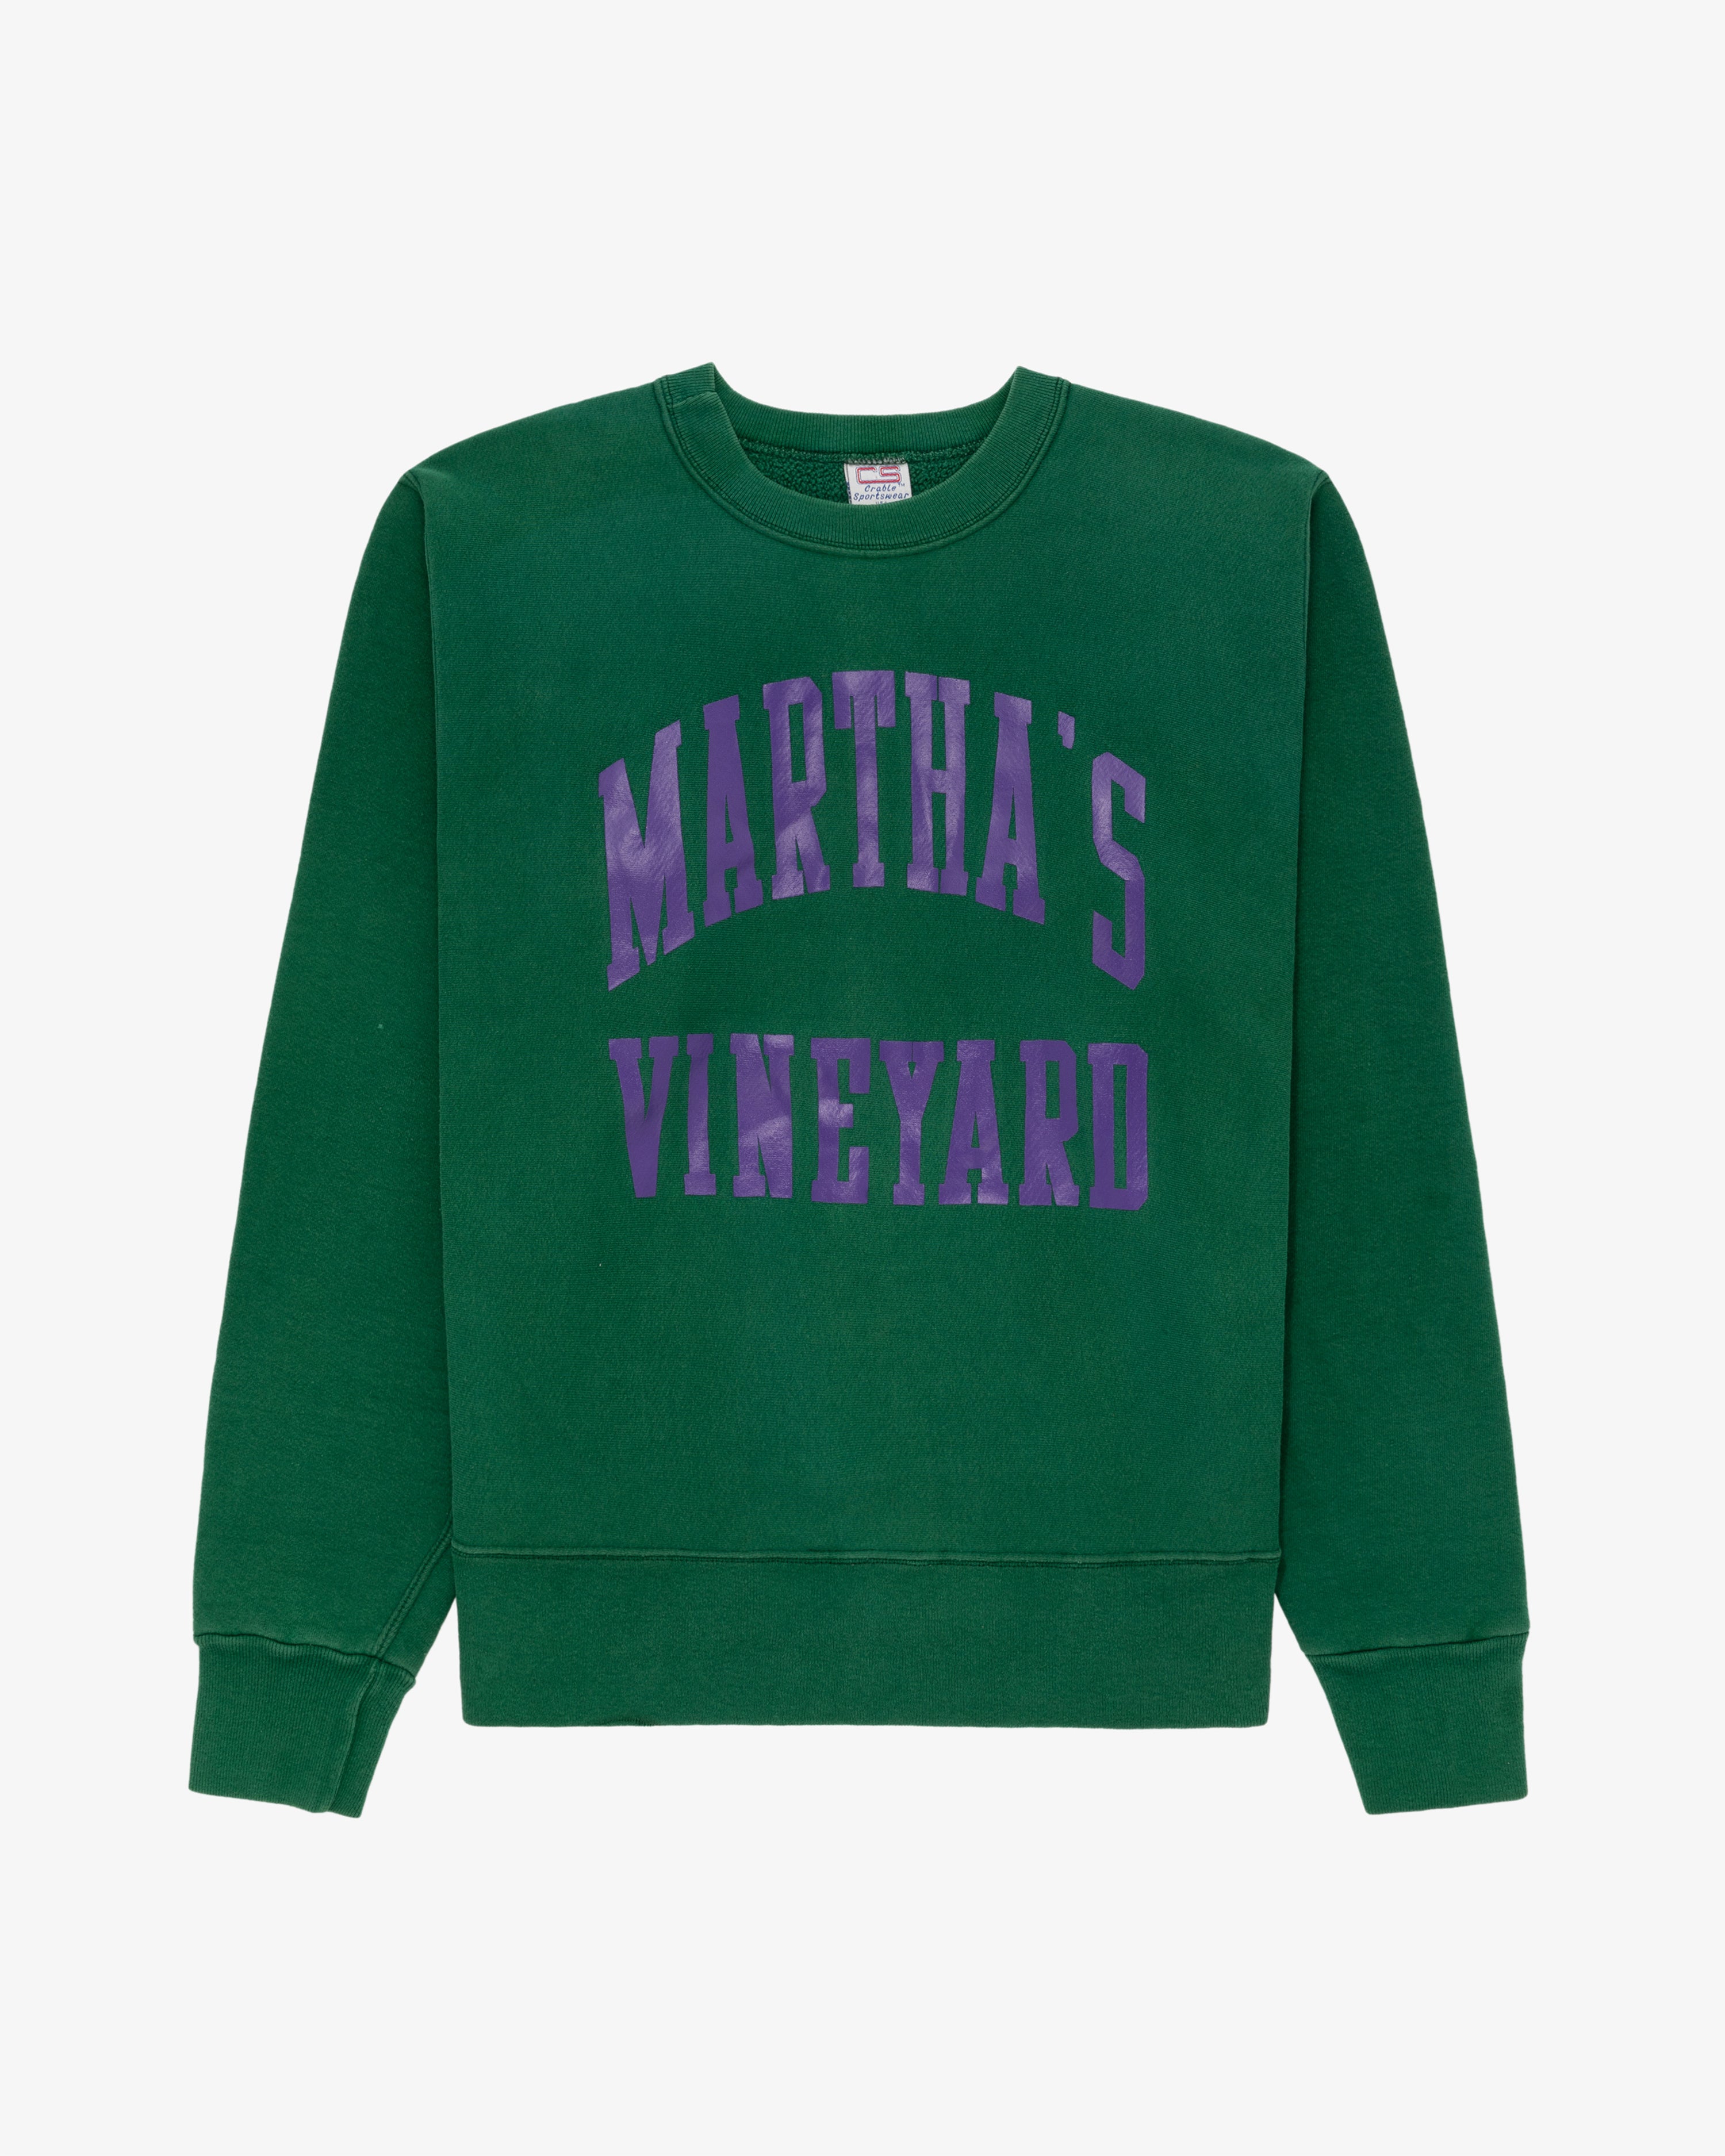 Vintage Martha's Vineyard Sweatshirt